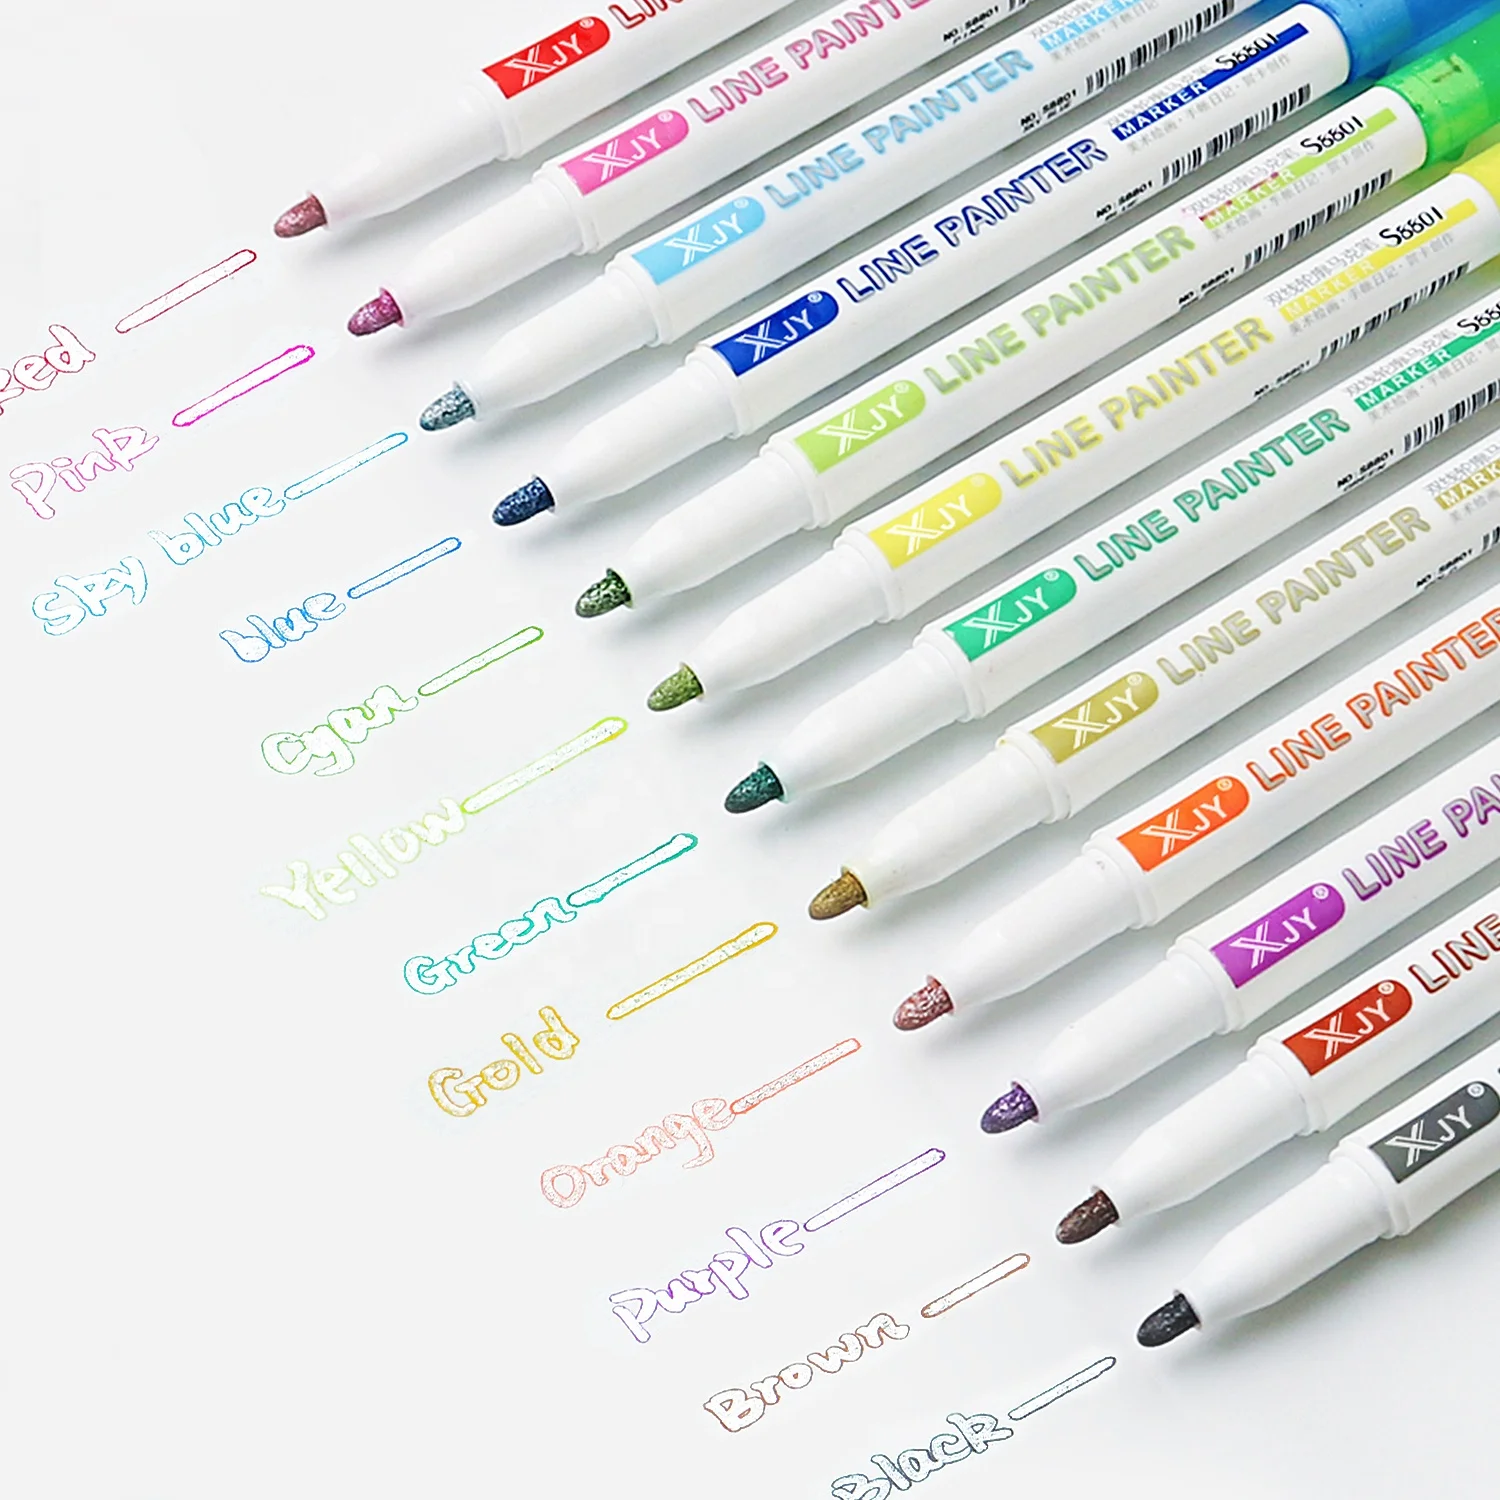 Double-Line Contour Pens Double Line pen Outline Marker Pen DIY Poster Contour Pen for Gift Card Writing Drawing art markers